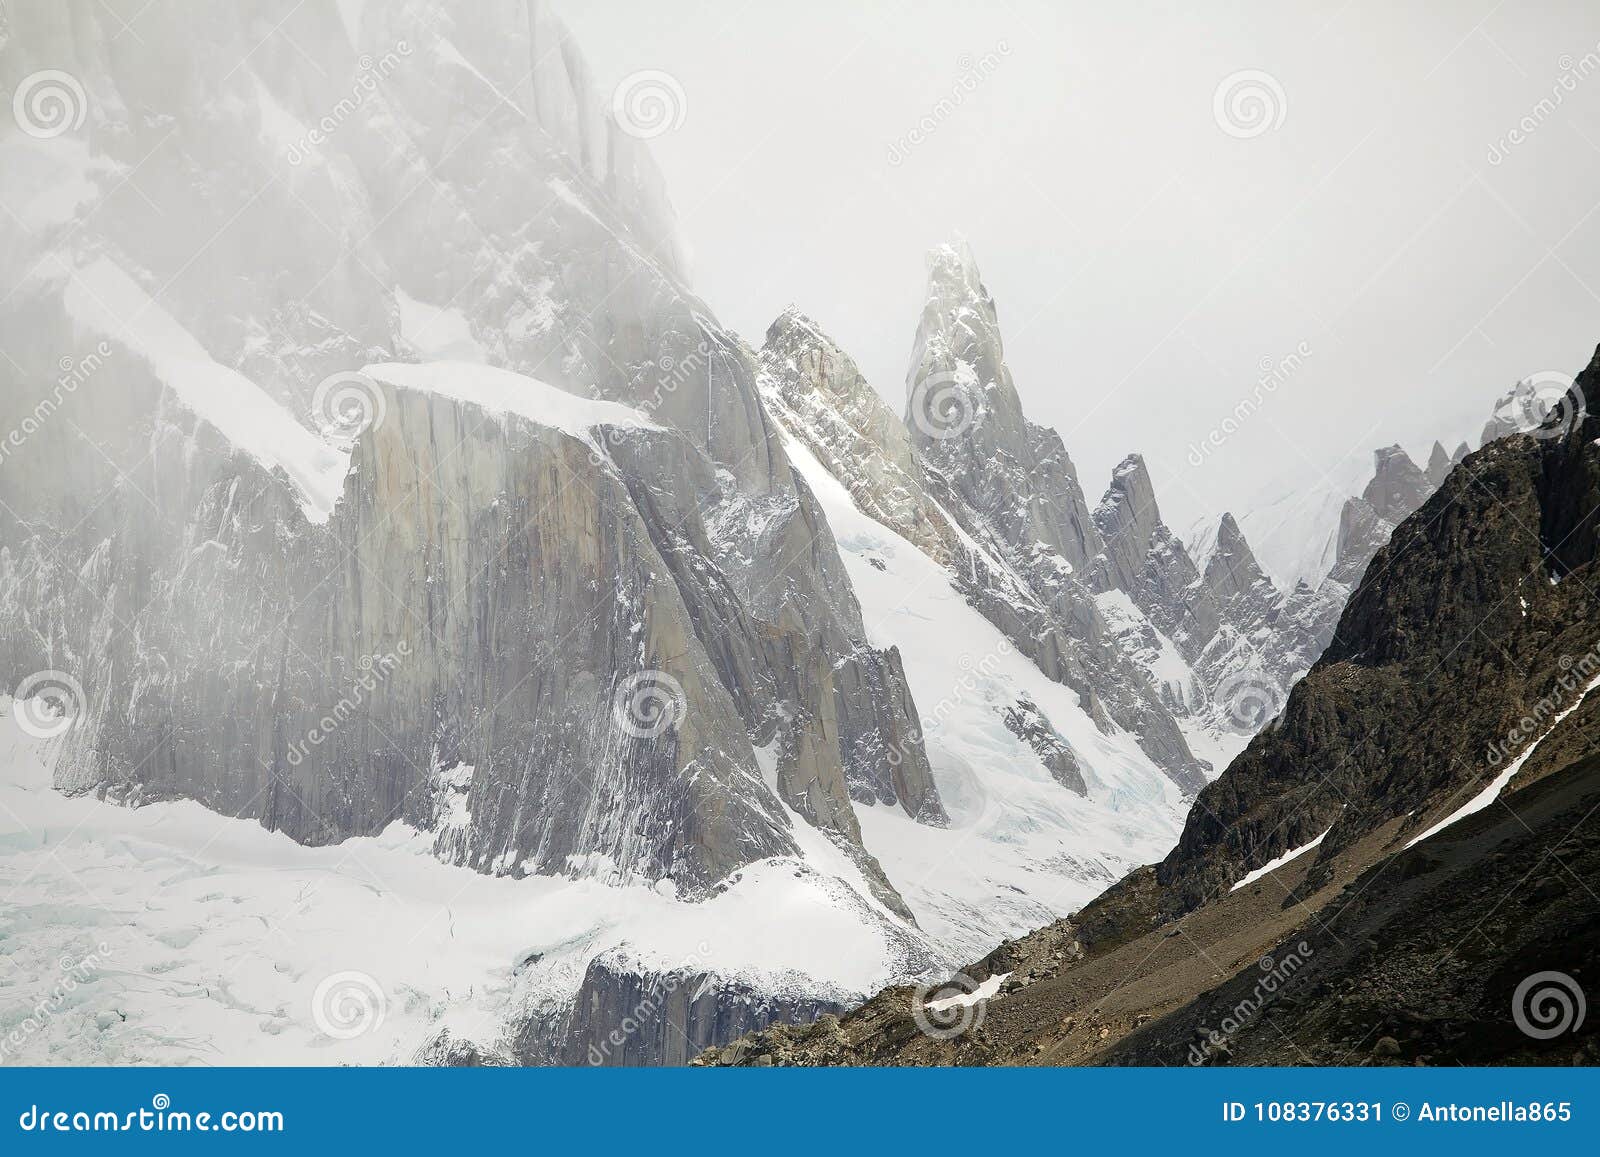 aguja bifida in the cerro torre group at the los glaciares national park, argentina